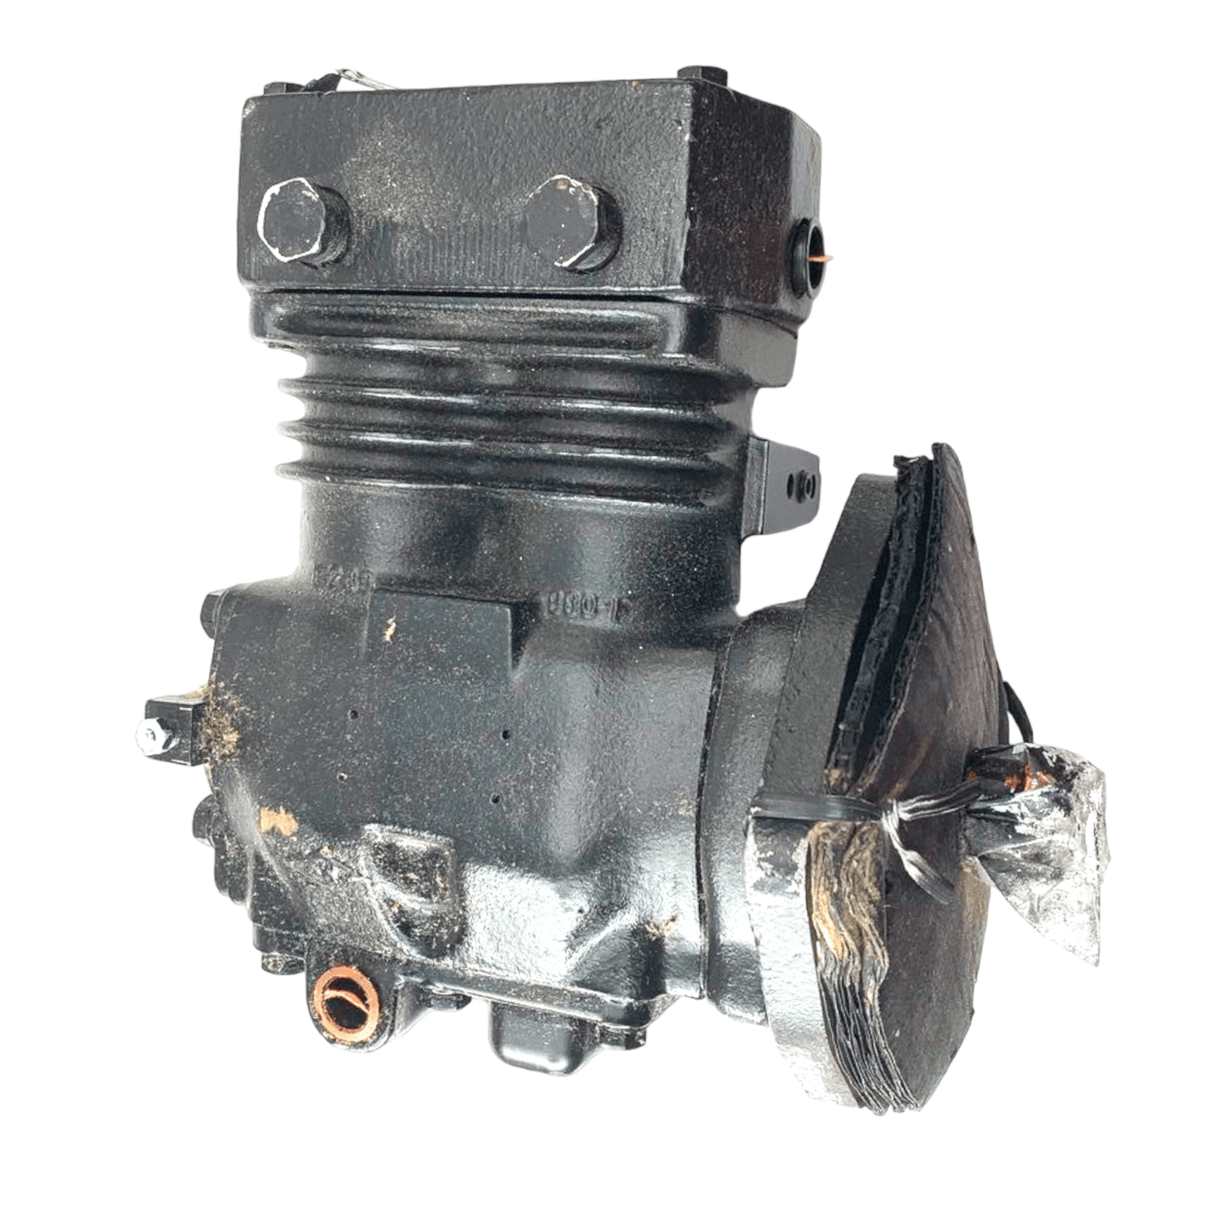 0R-2895 Genuine Cat Air Compressor TF-501.